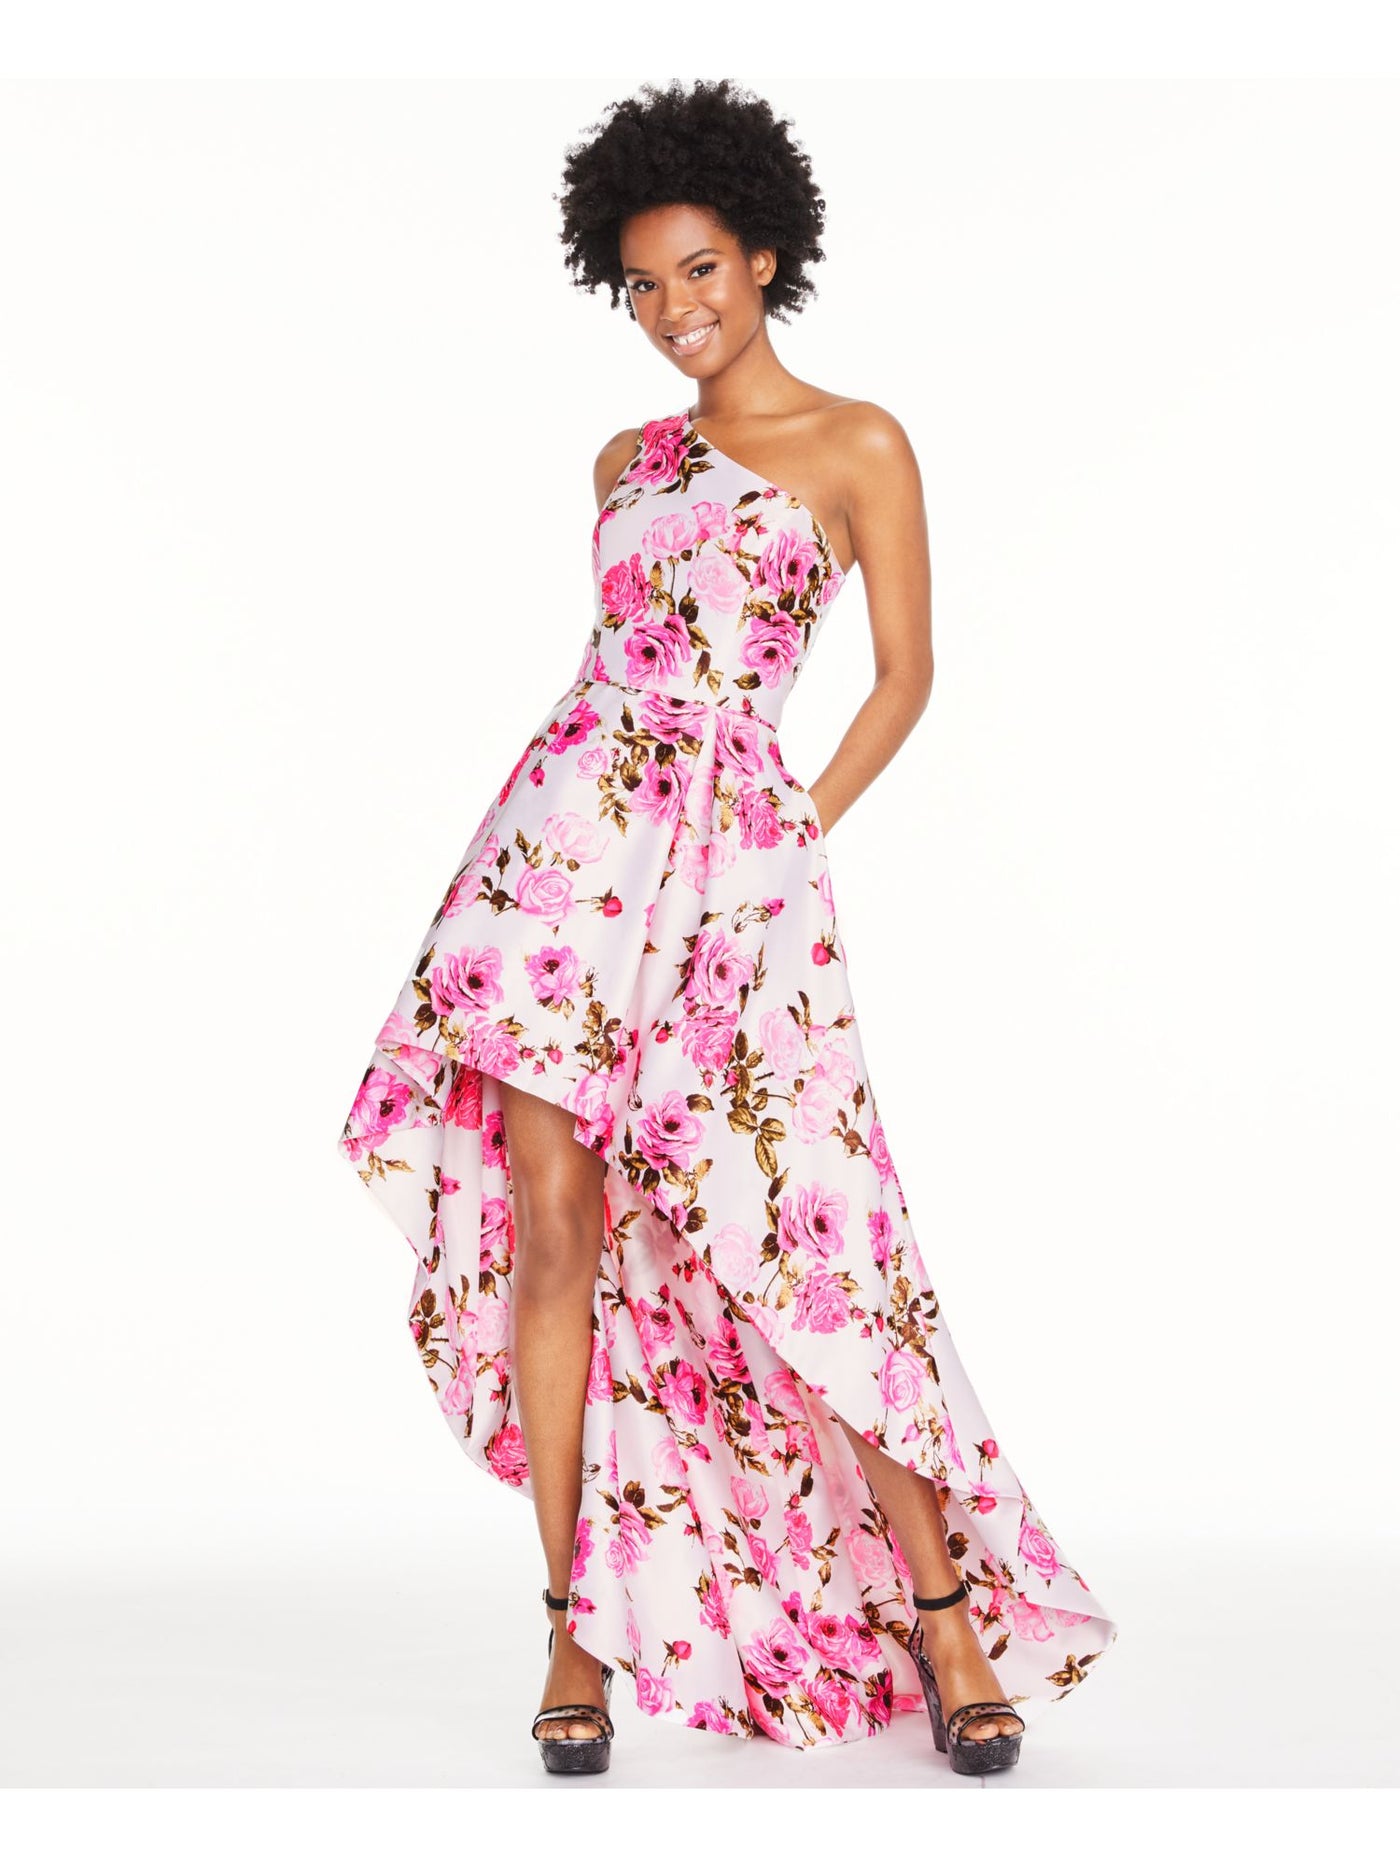 BLONDIE Womens Pink Floral Sleeveless Asymmetrical Neckline Full-Length Prom Hi-Lo Dress Juniors 7